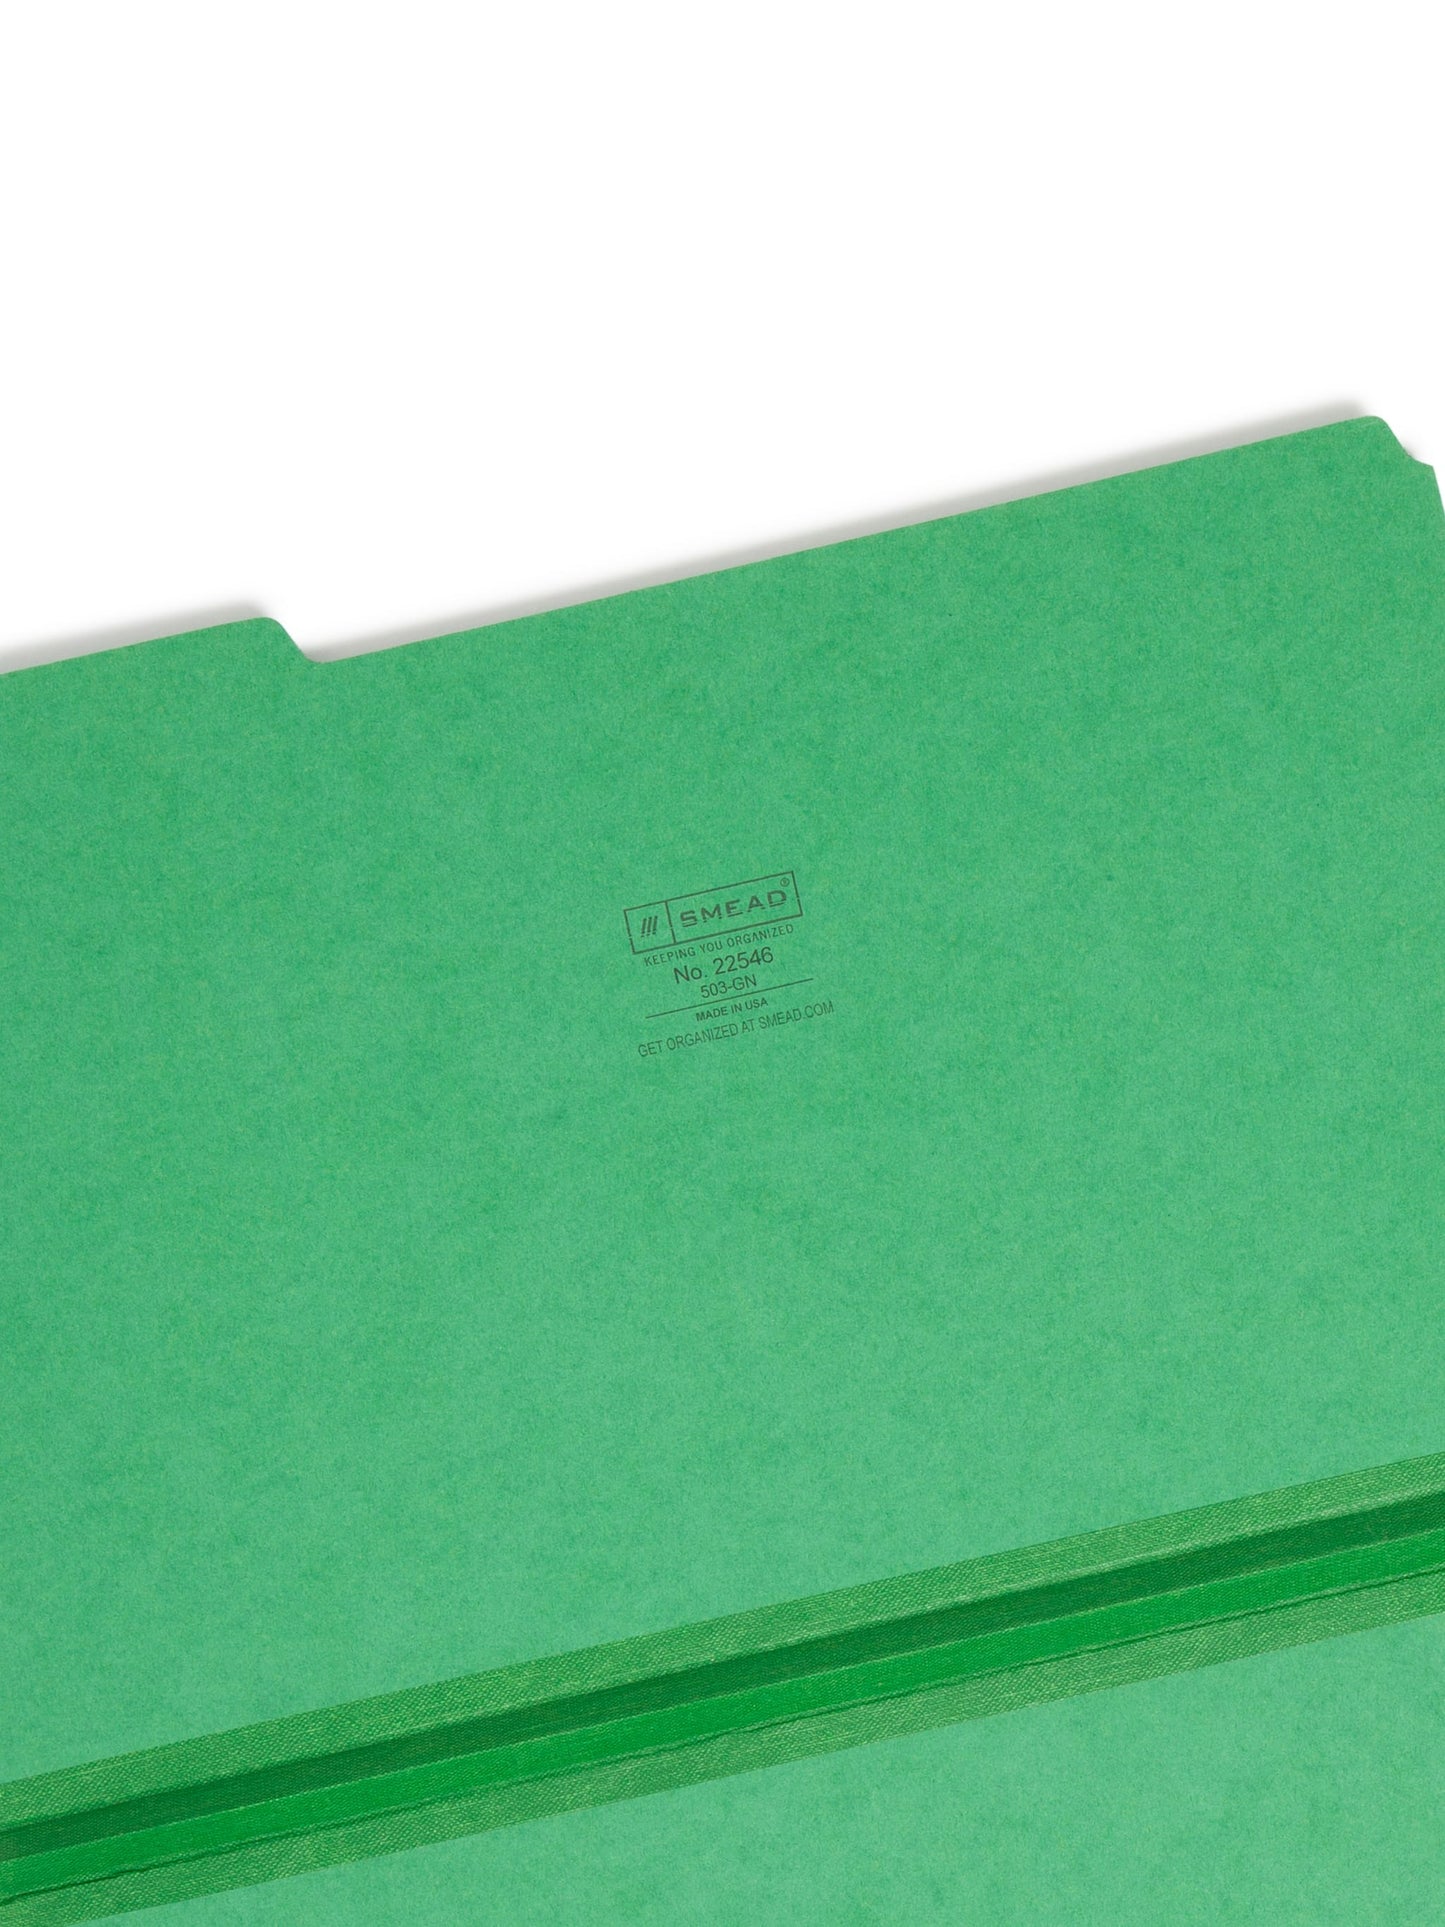 Pressboard File Folder, 1 inch Expansion, 1/3-Cut Tab, Green Color, Legal Size, Set of 25, 086486225465